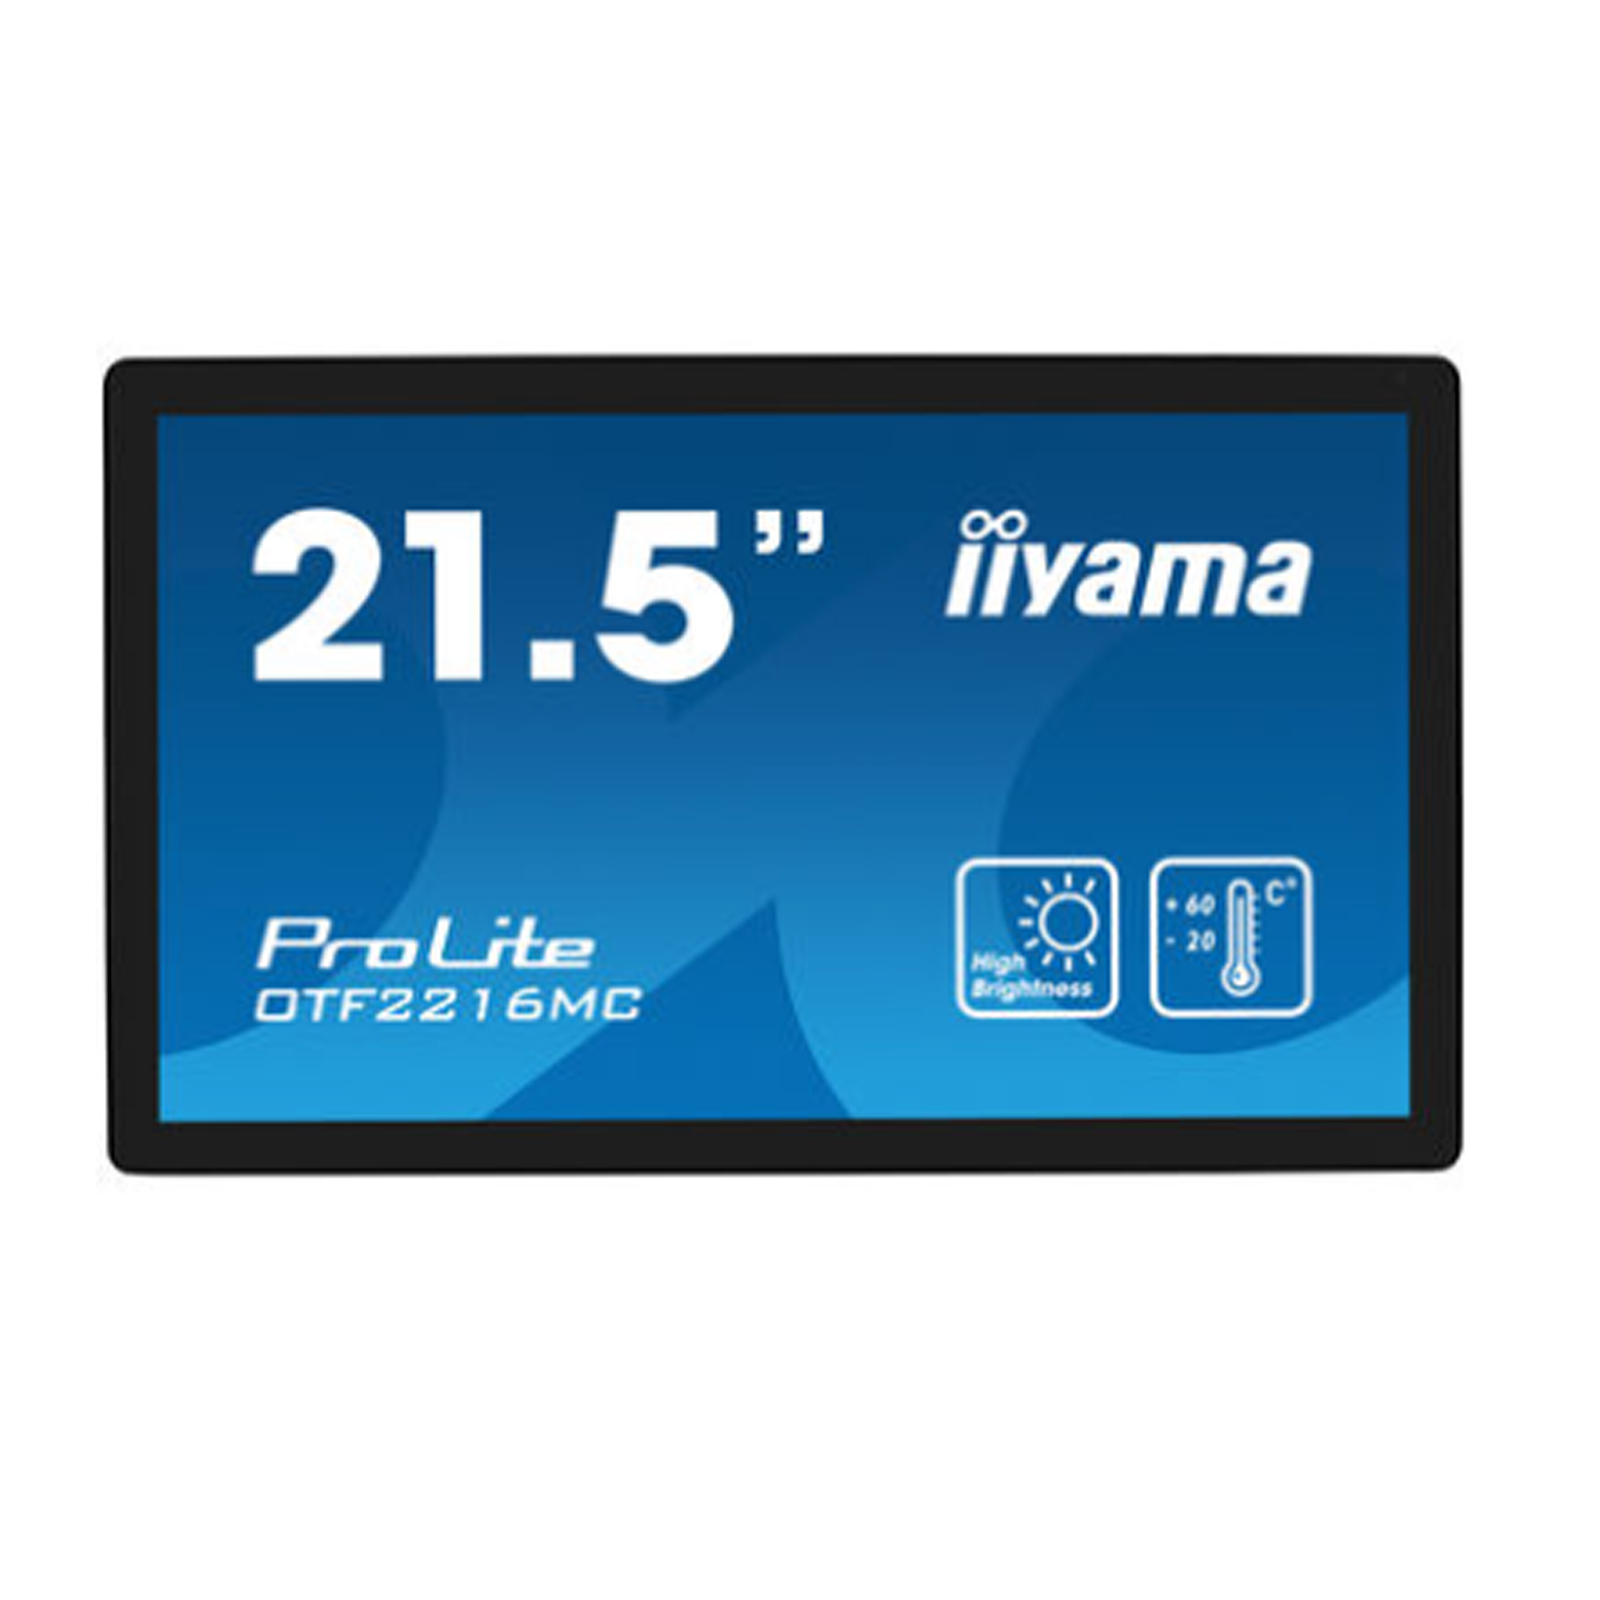 Monitor 21.5" LCD touchscreen iiyama